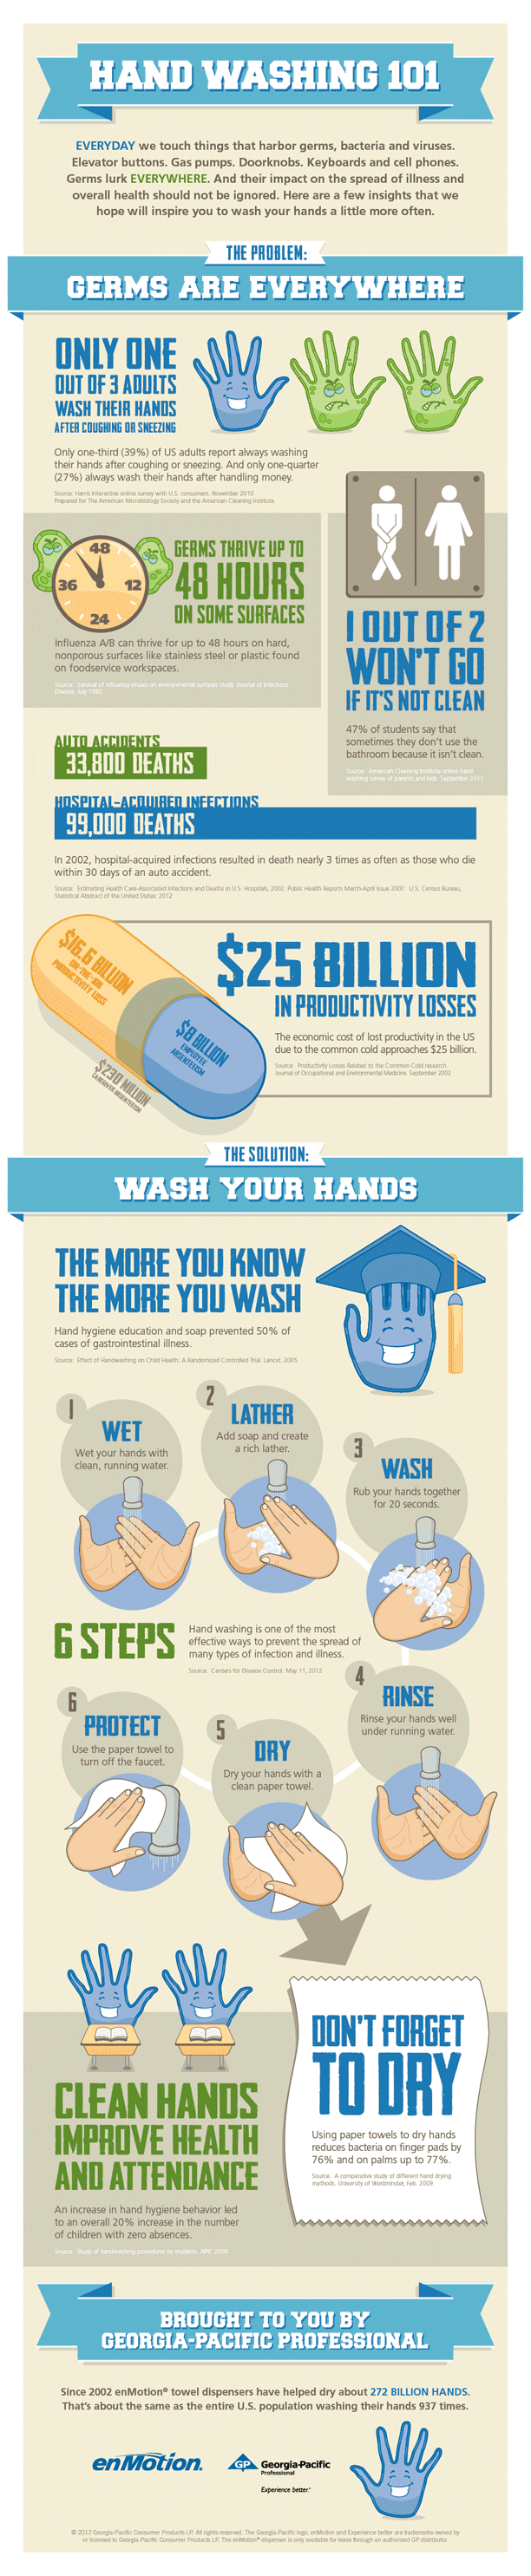 Handwashing Health Facts